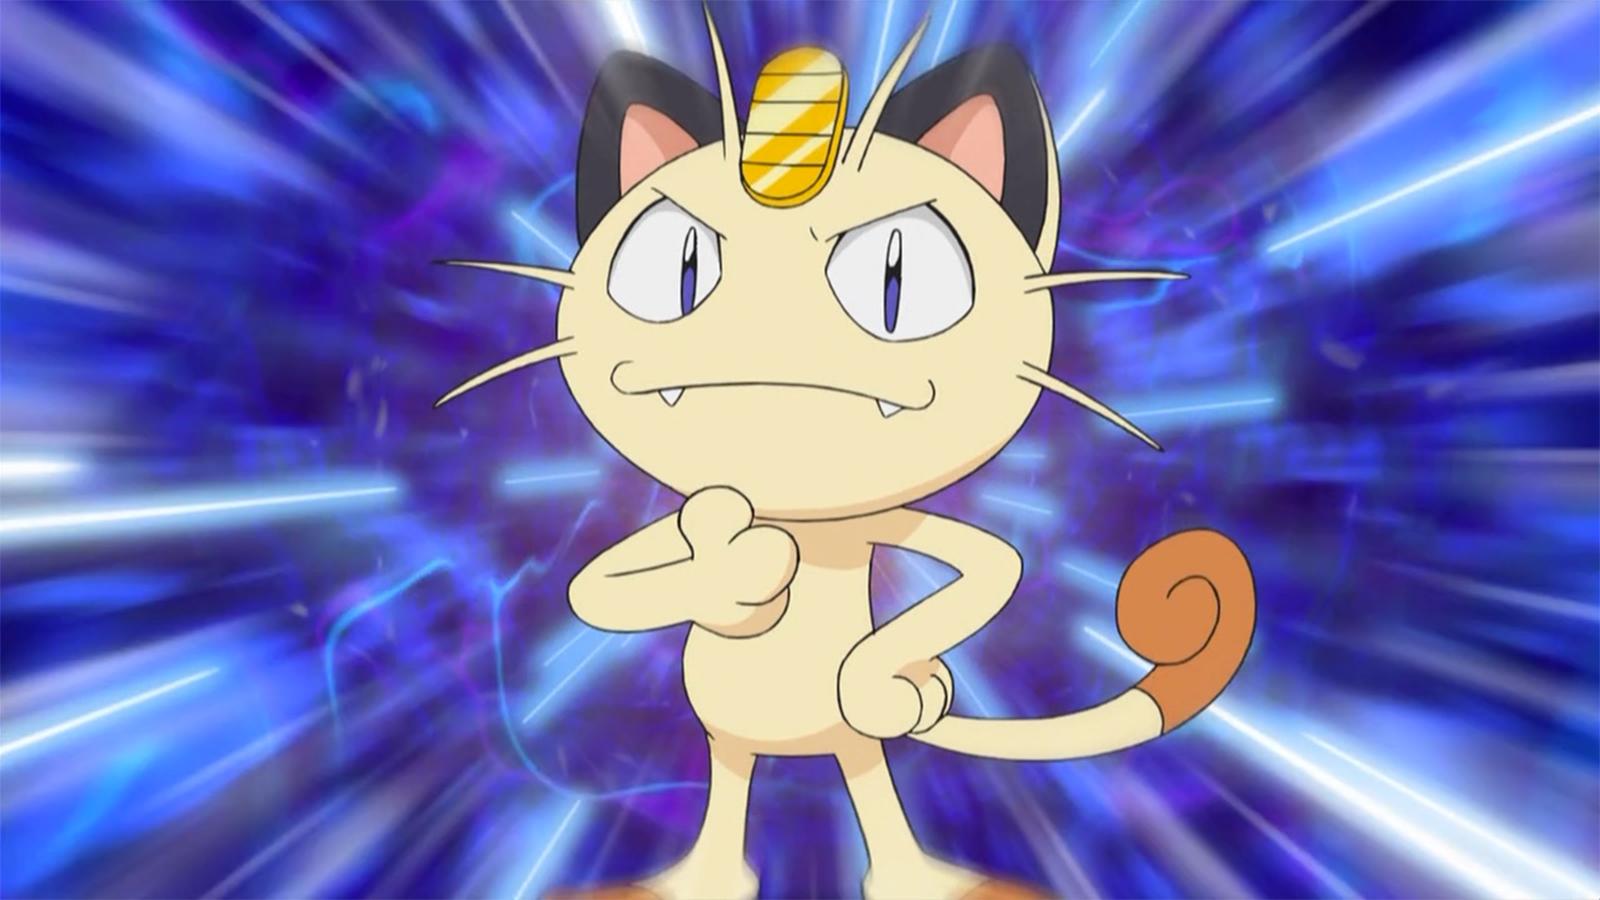 How to get Shiny Mew in Pokemon Go Kanto event - Dexerto